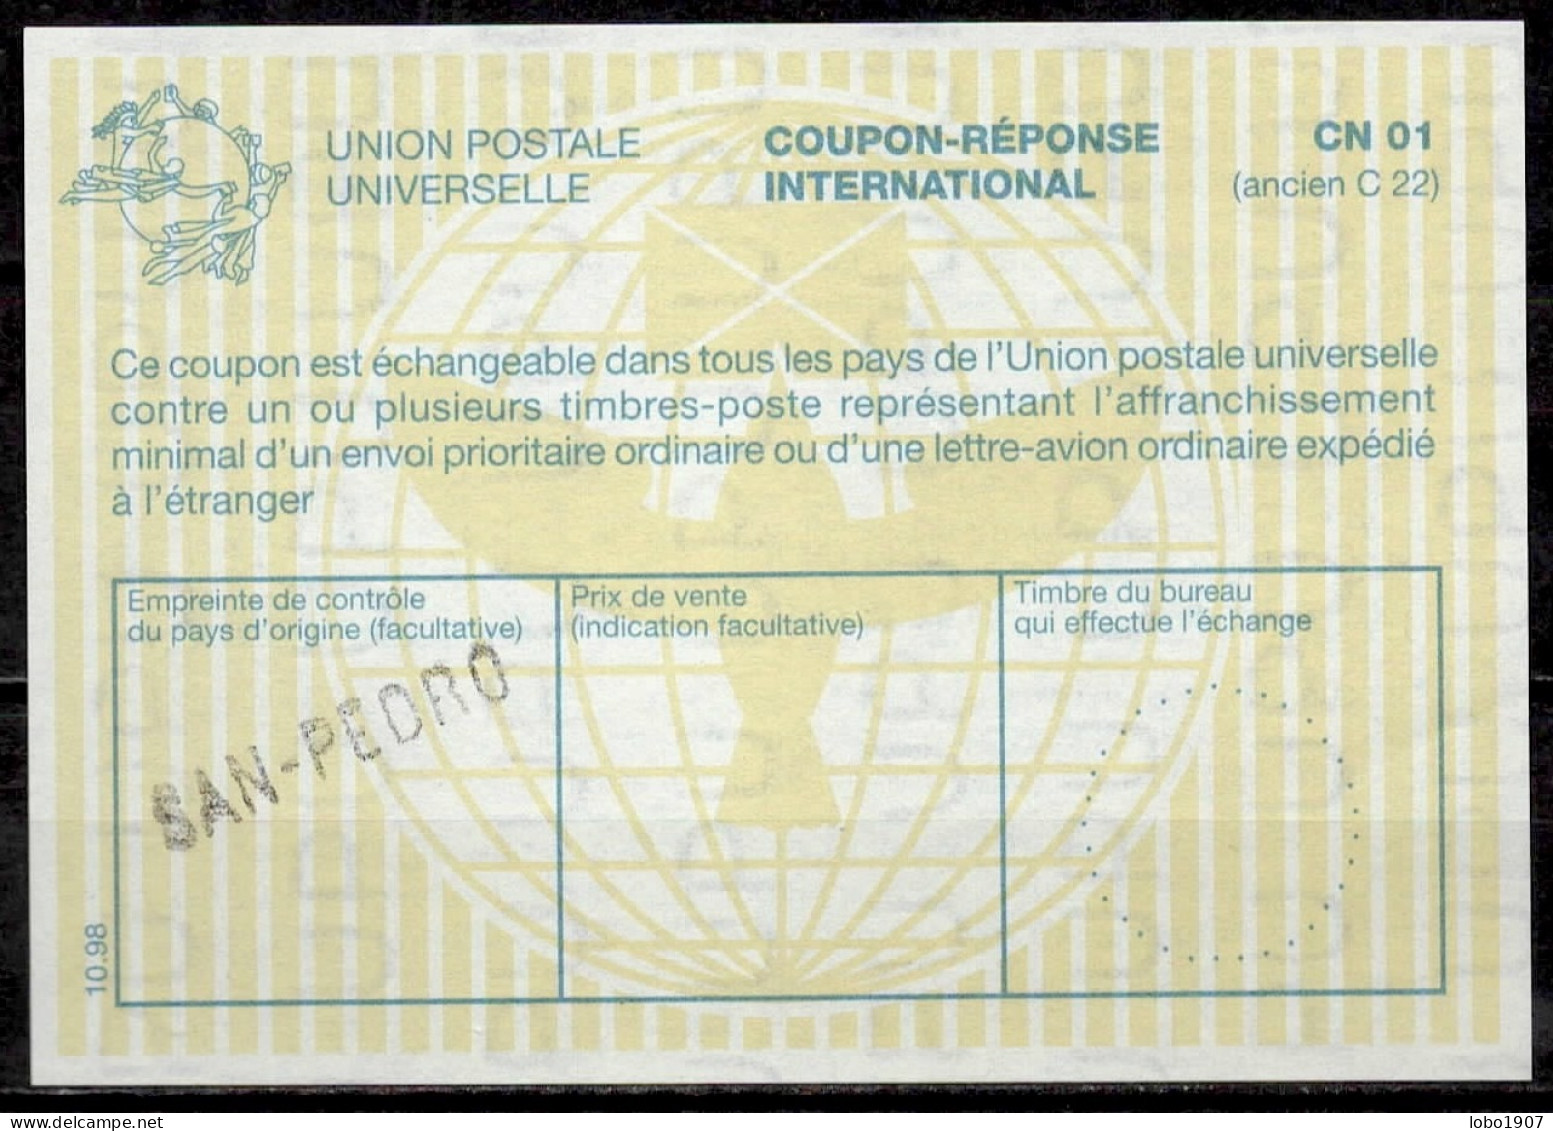 CÔTE D'IVOIRE IVORY COAST  La30  International Reply Coupon Reponse Antwortschein IRC IAS O SAN PEDRO - Côte D'Ivoire (1960-...)